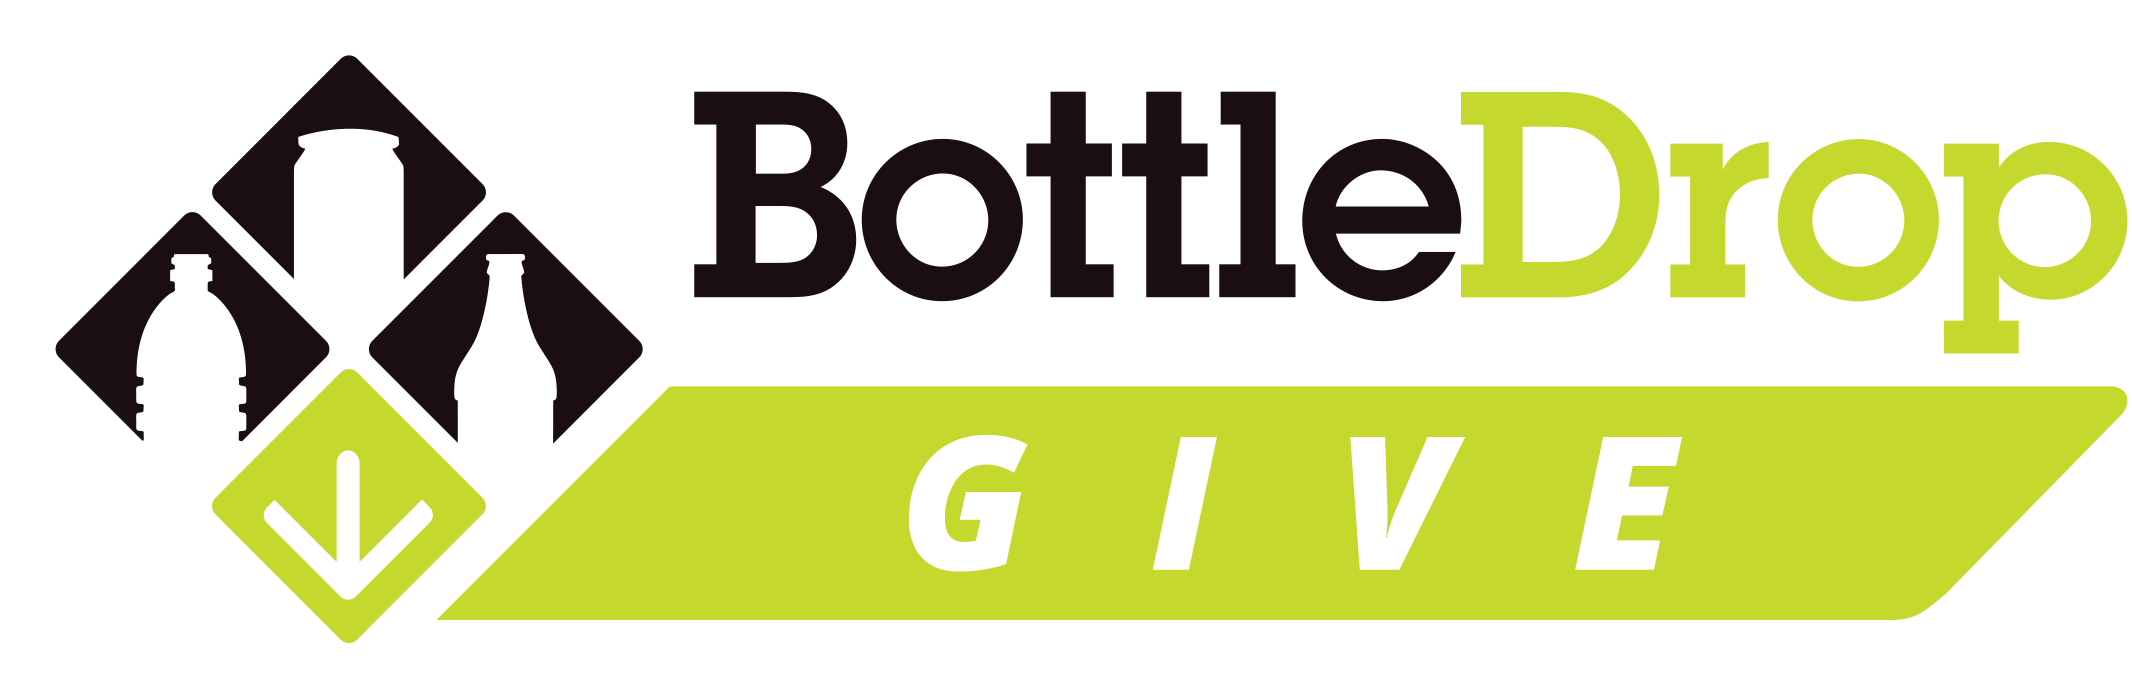 Bottle Drop Logo - BottleDrop | Newberg Animal Shelter